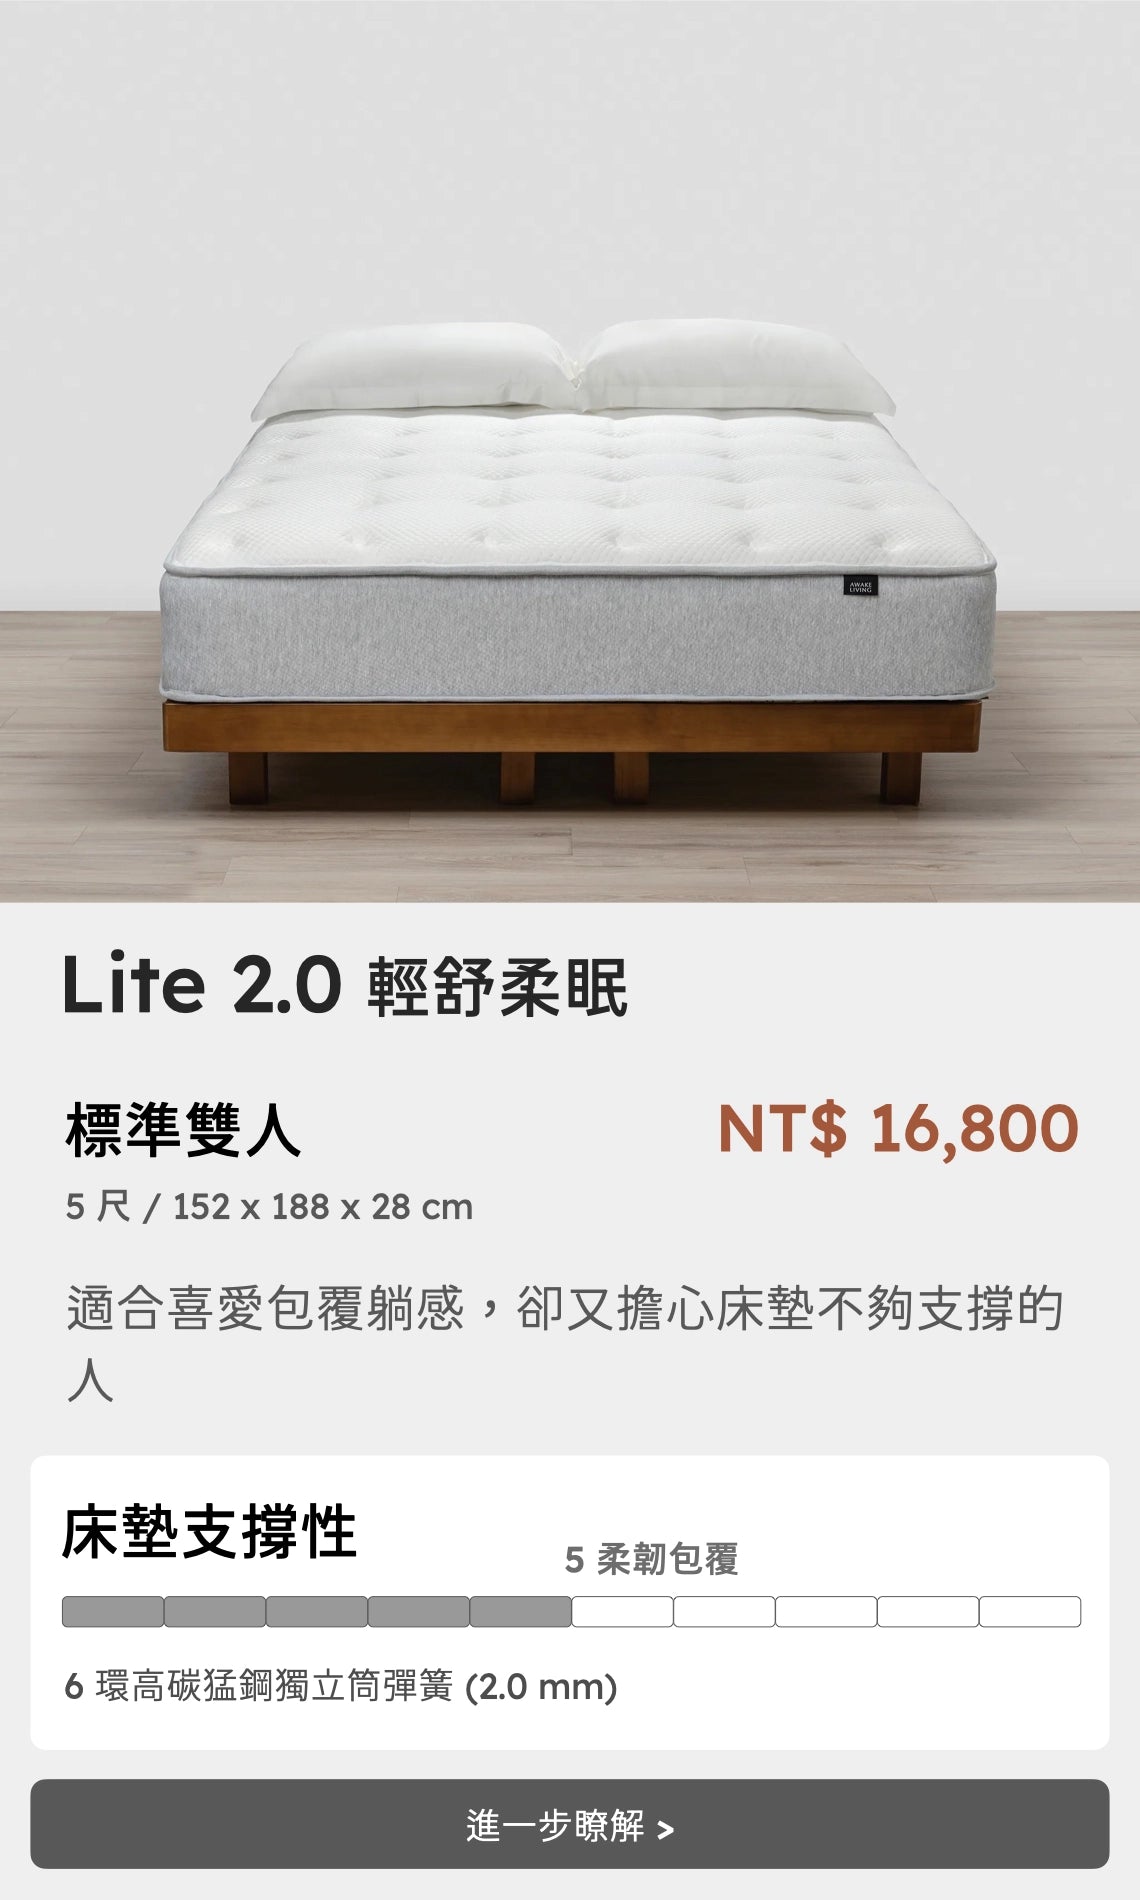 Lite 2.0 輕舒柔眠床墊商品卡 - 標準雙人價格 & 床墊支撐性 & 床墊舒適層